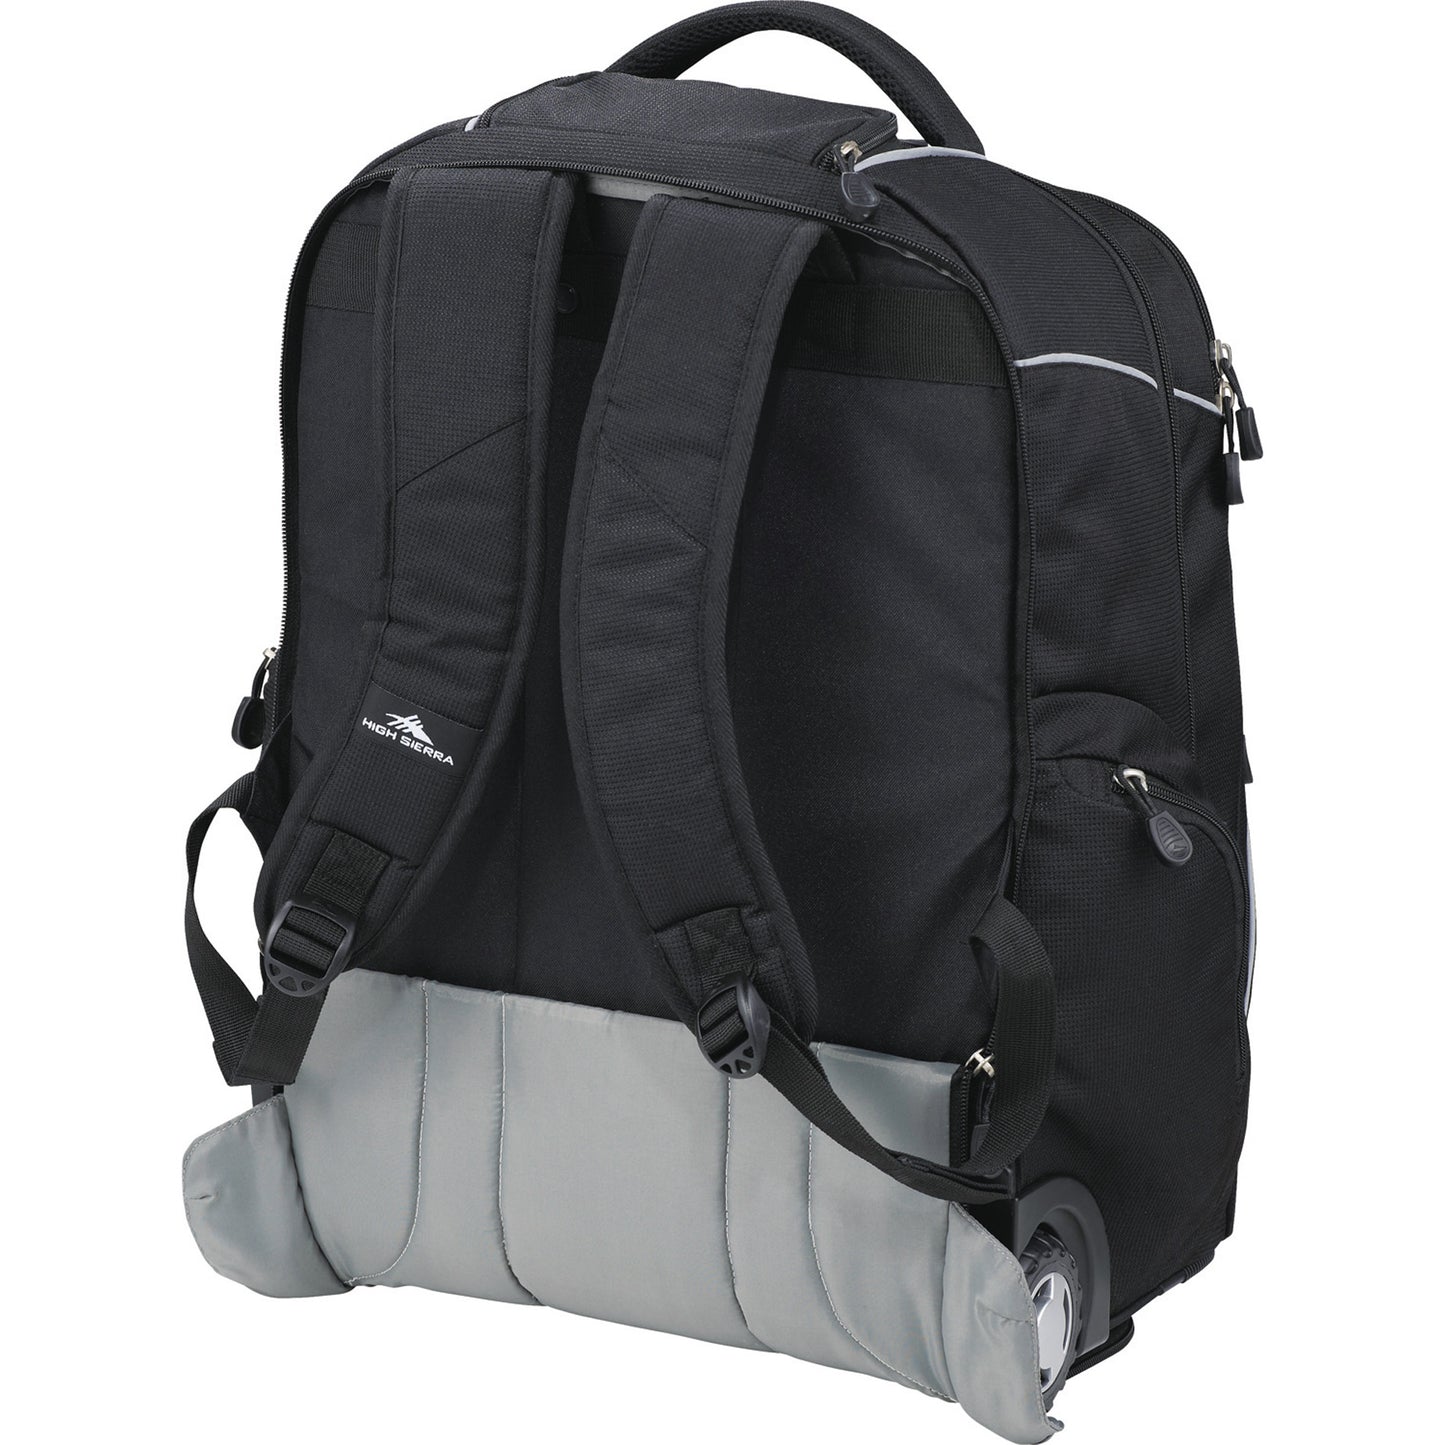 High Sierra® Powerglide Wheeled Computer Backpack